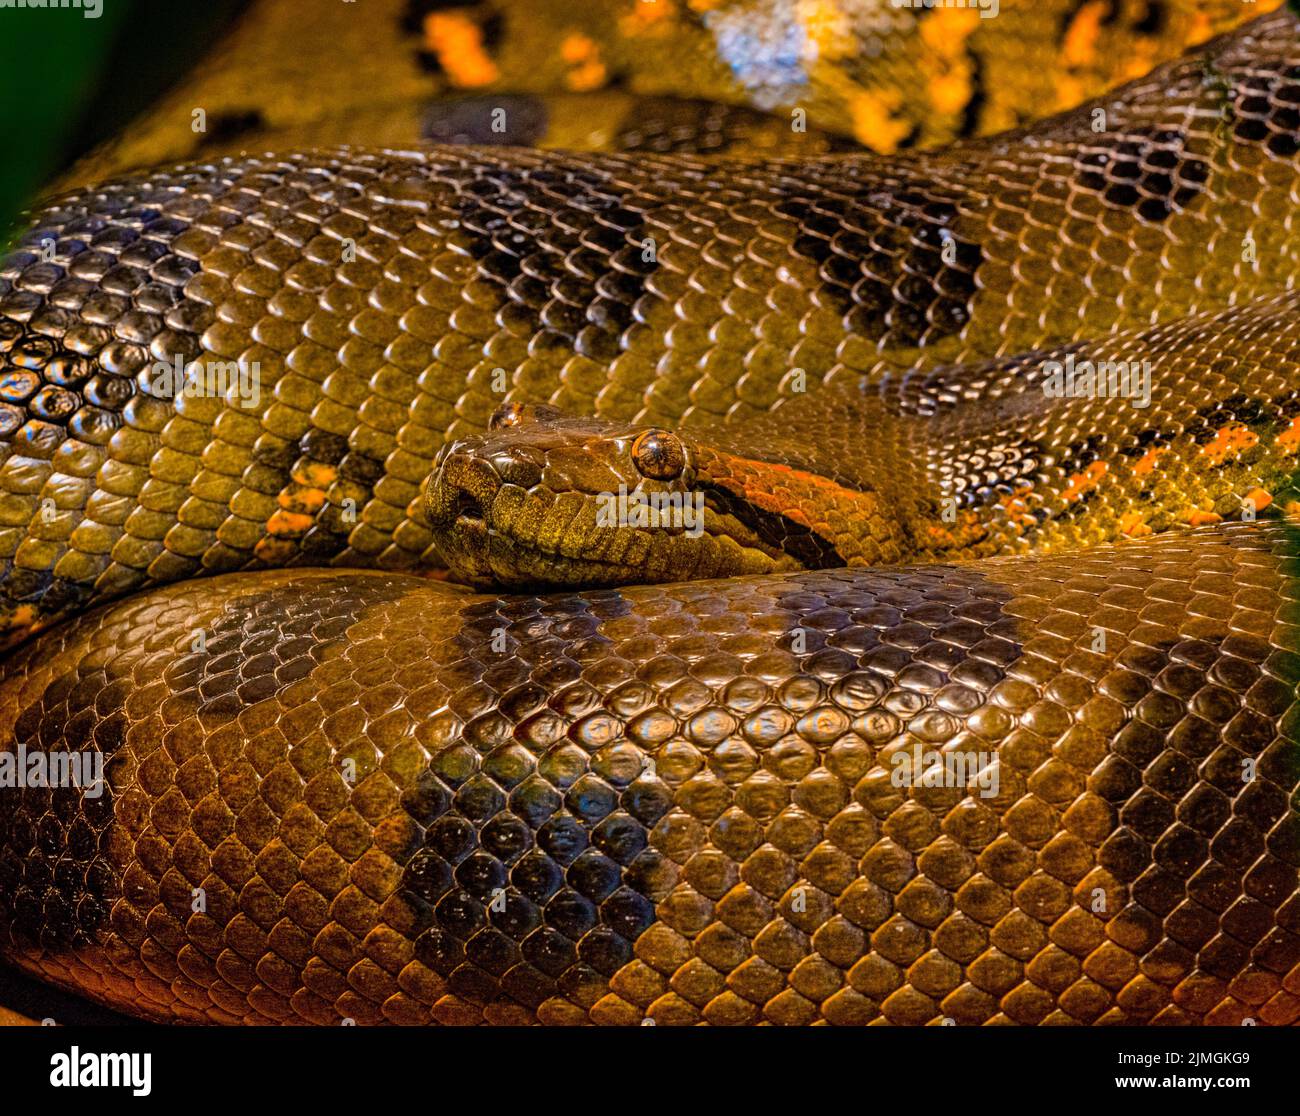 Green anaconda (Eunectes murinus), also known as the giant anaconda found in South America Stock Photo